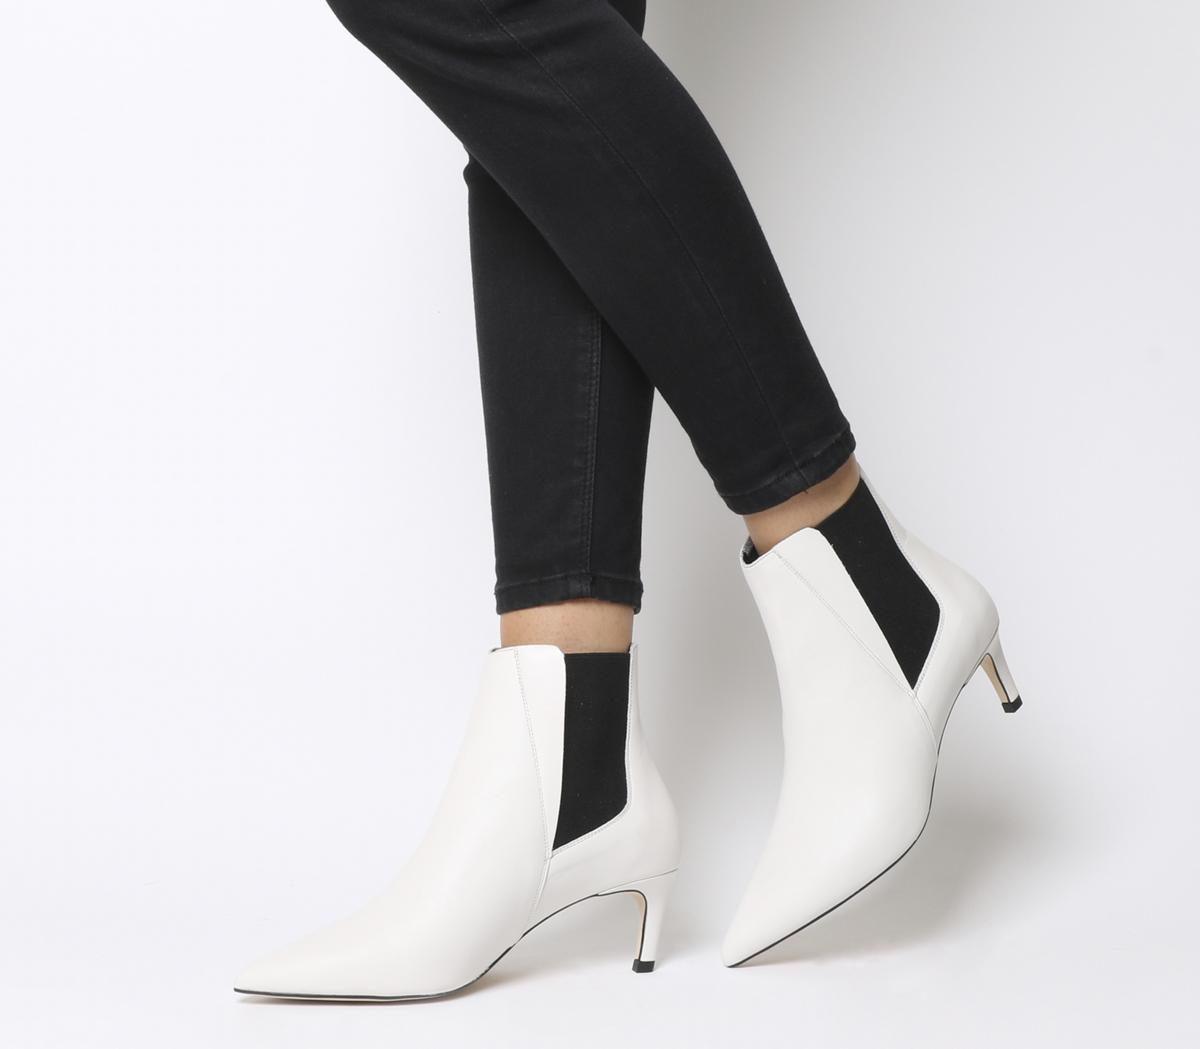 white leather kitten heel shoes